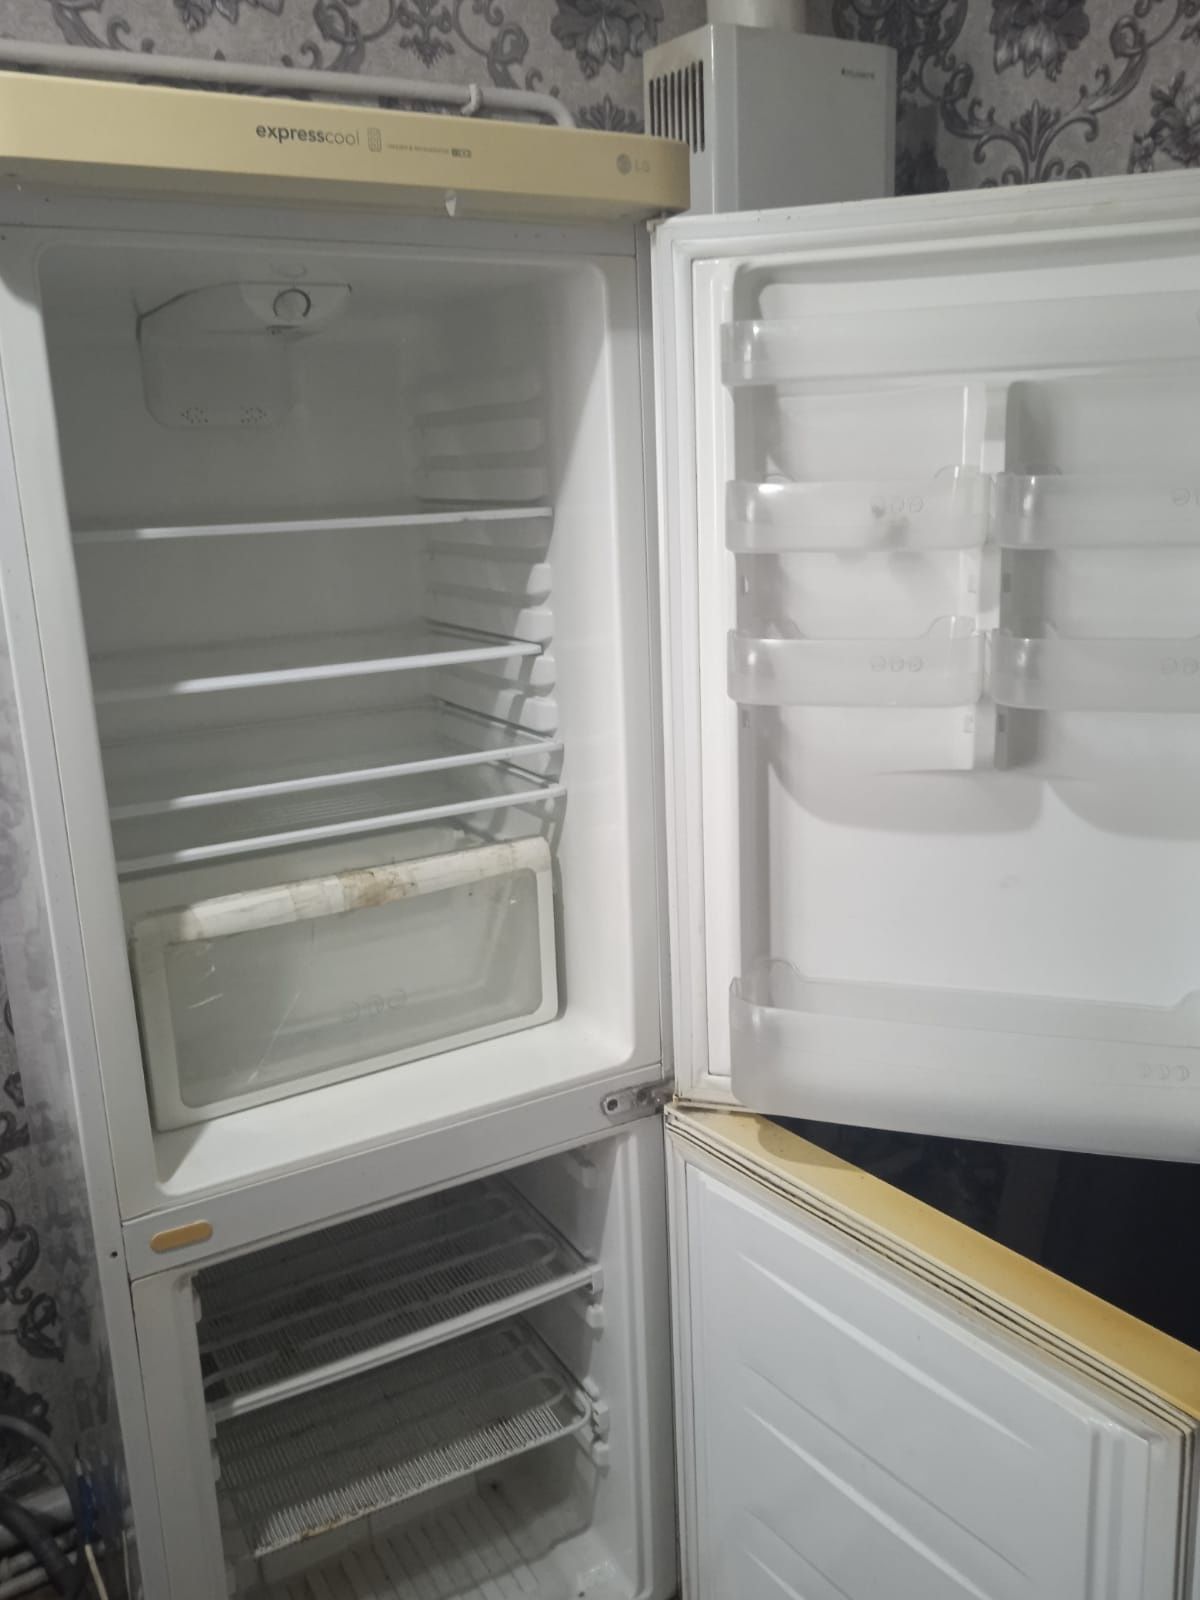 Продам холодильник Lg